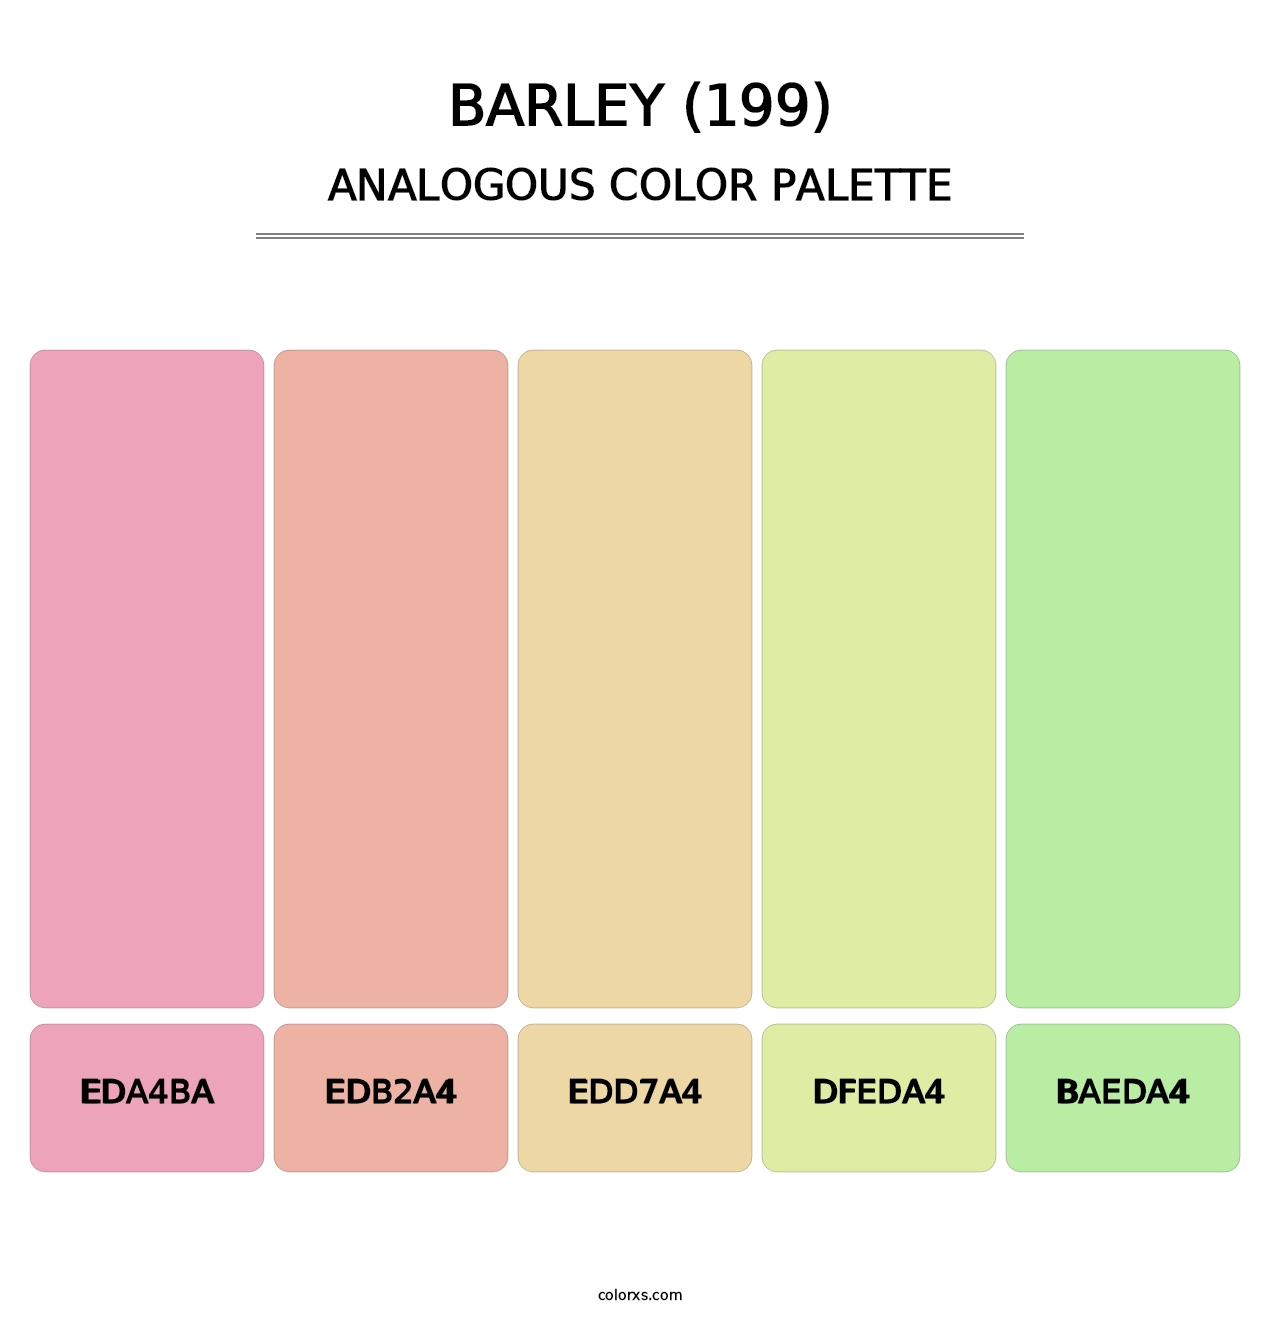 Barley (199) - Analogous Color Palette